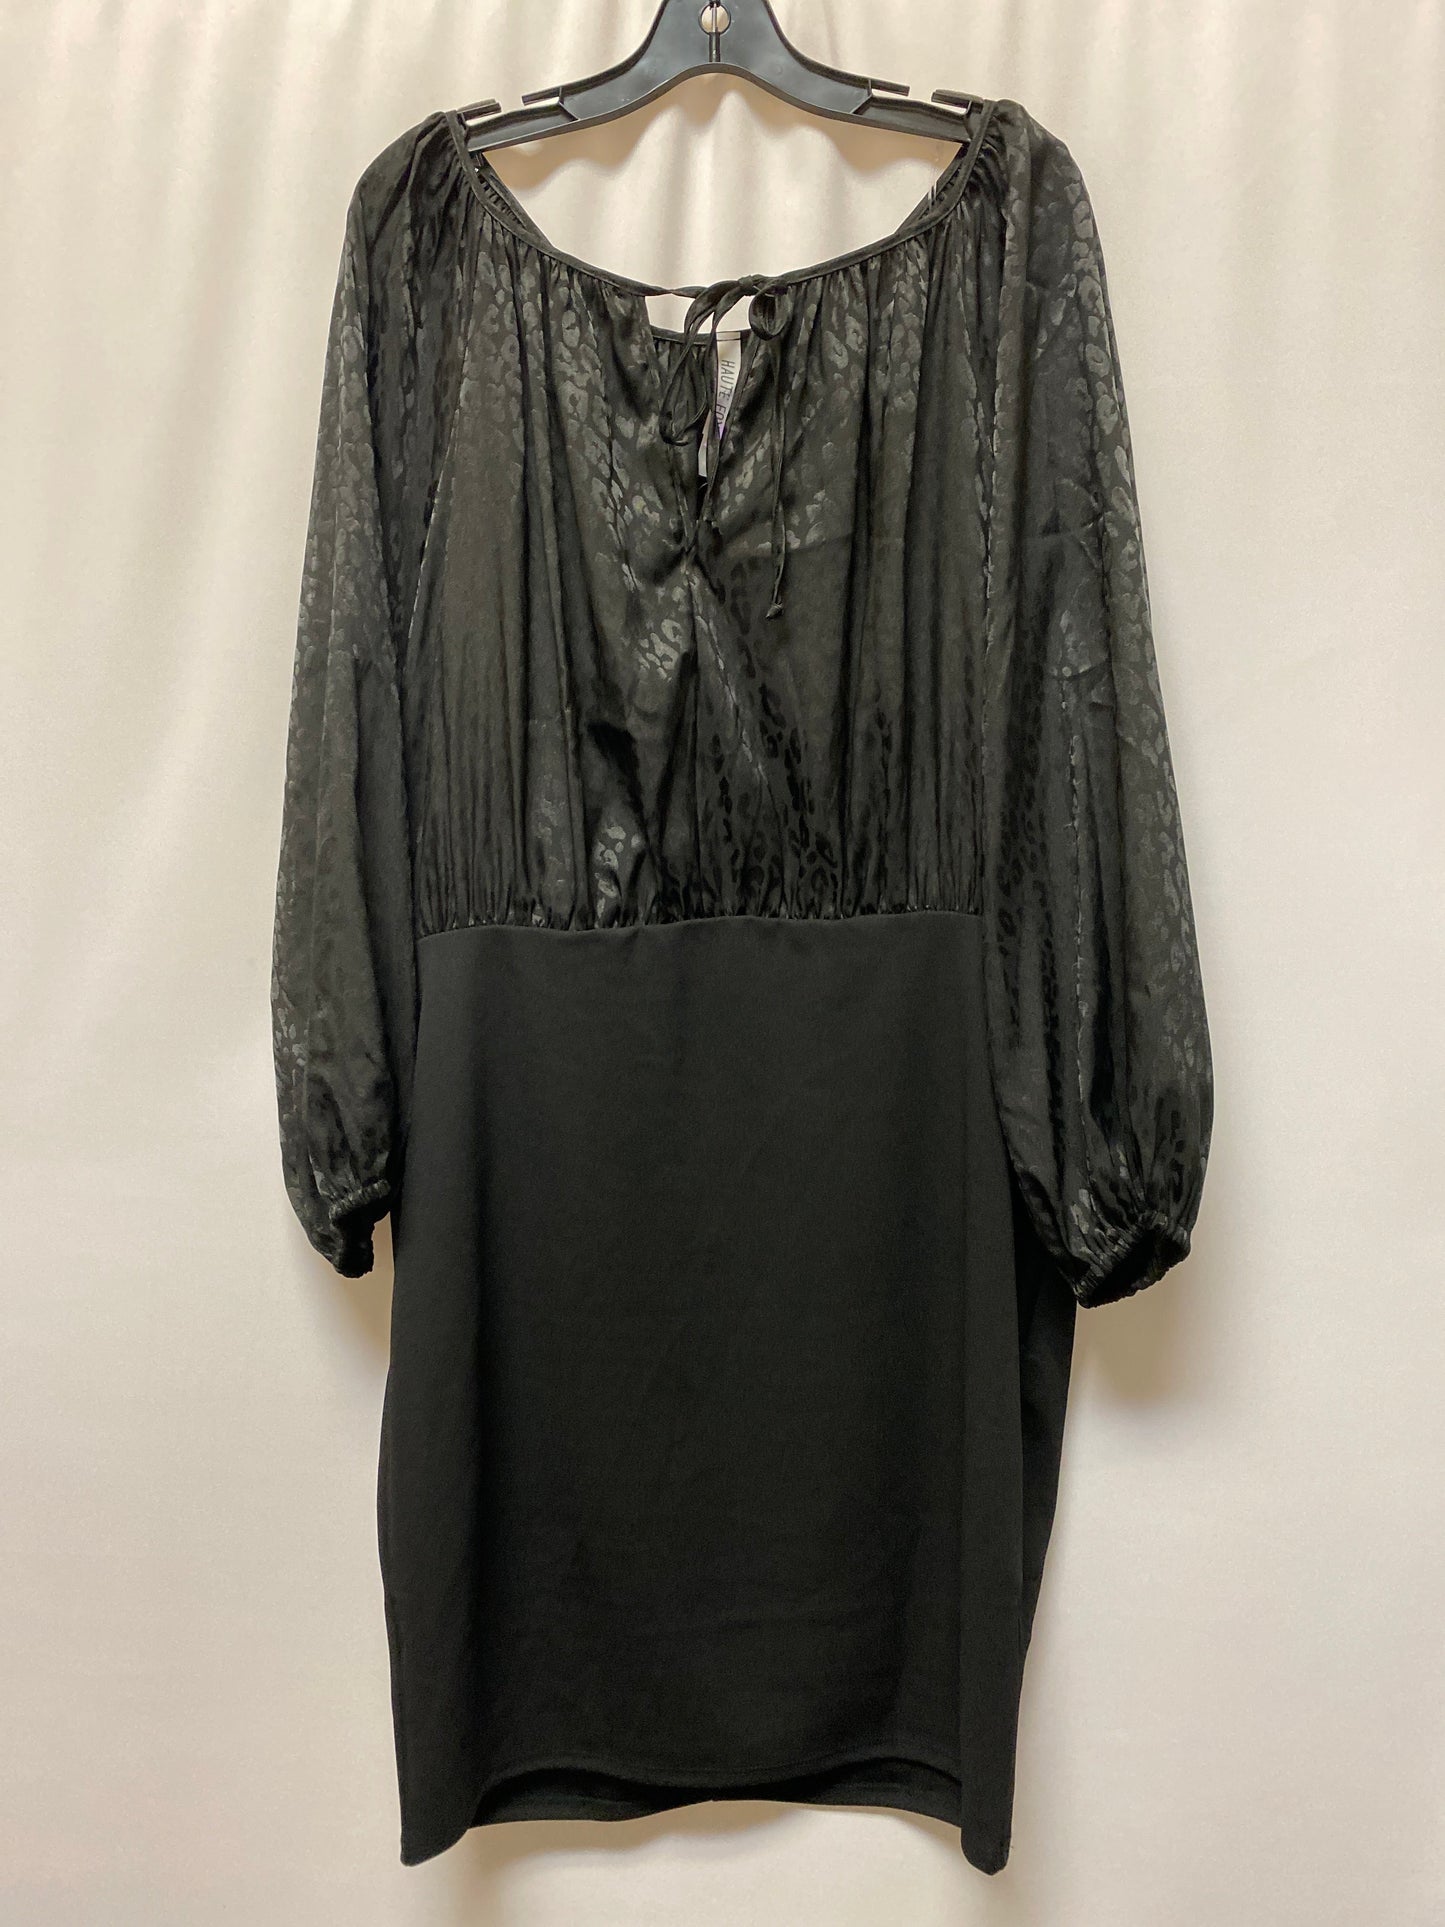 Black Dress Casual Midi Clothes Mentor, Size 2x